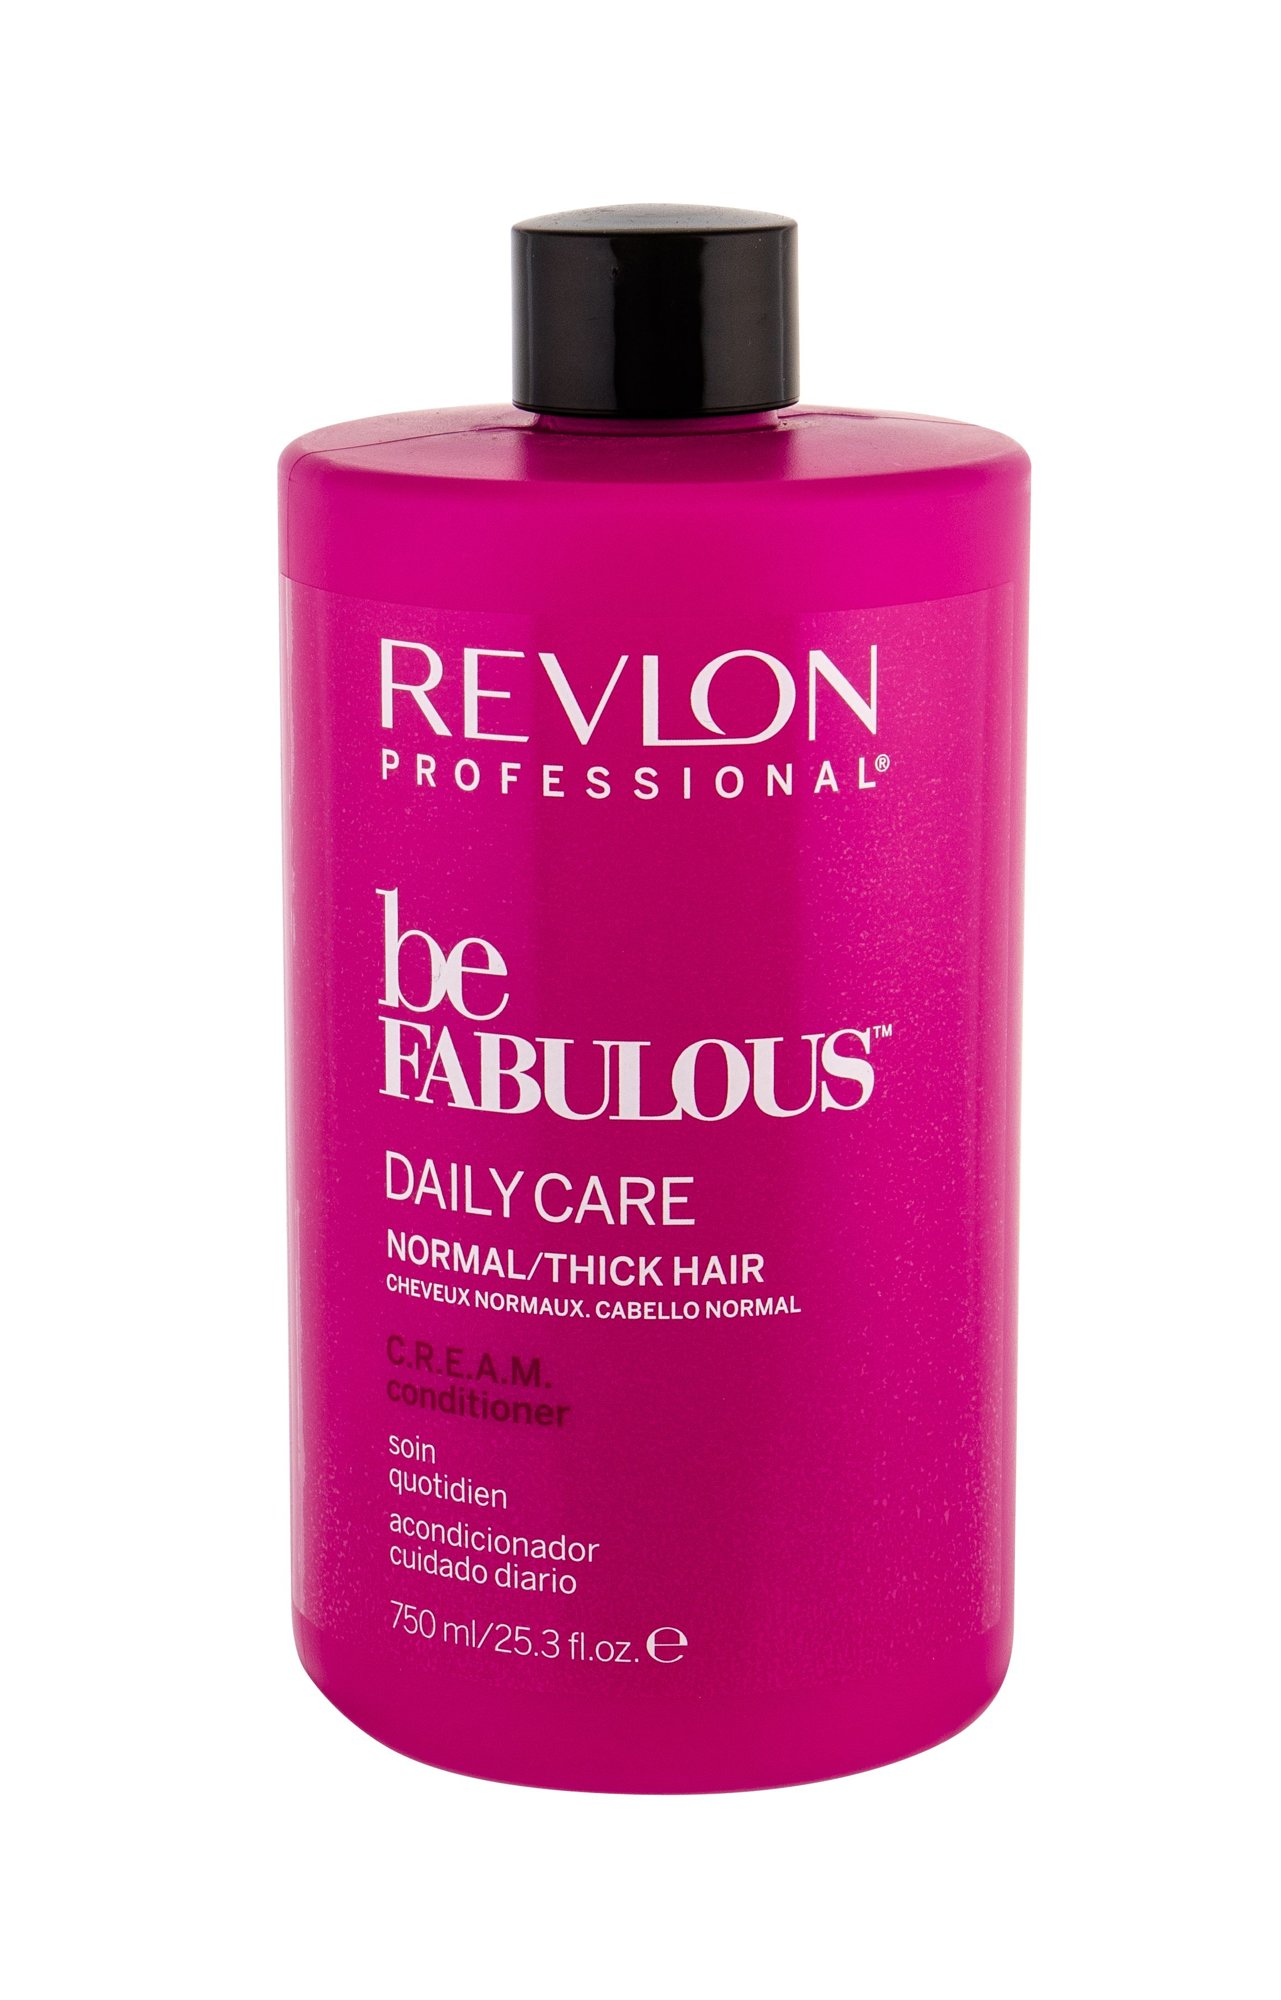 Revlon Professional Be Fabulous Daily Care Normal/Thick Hair 750ml kondicionierius